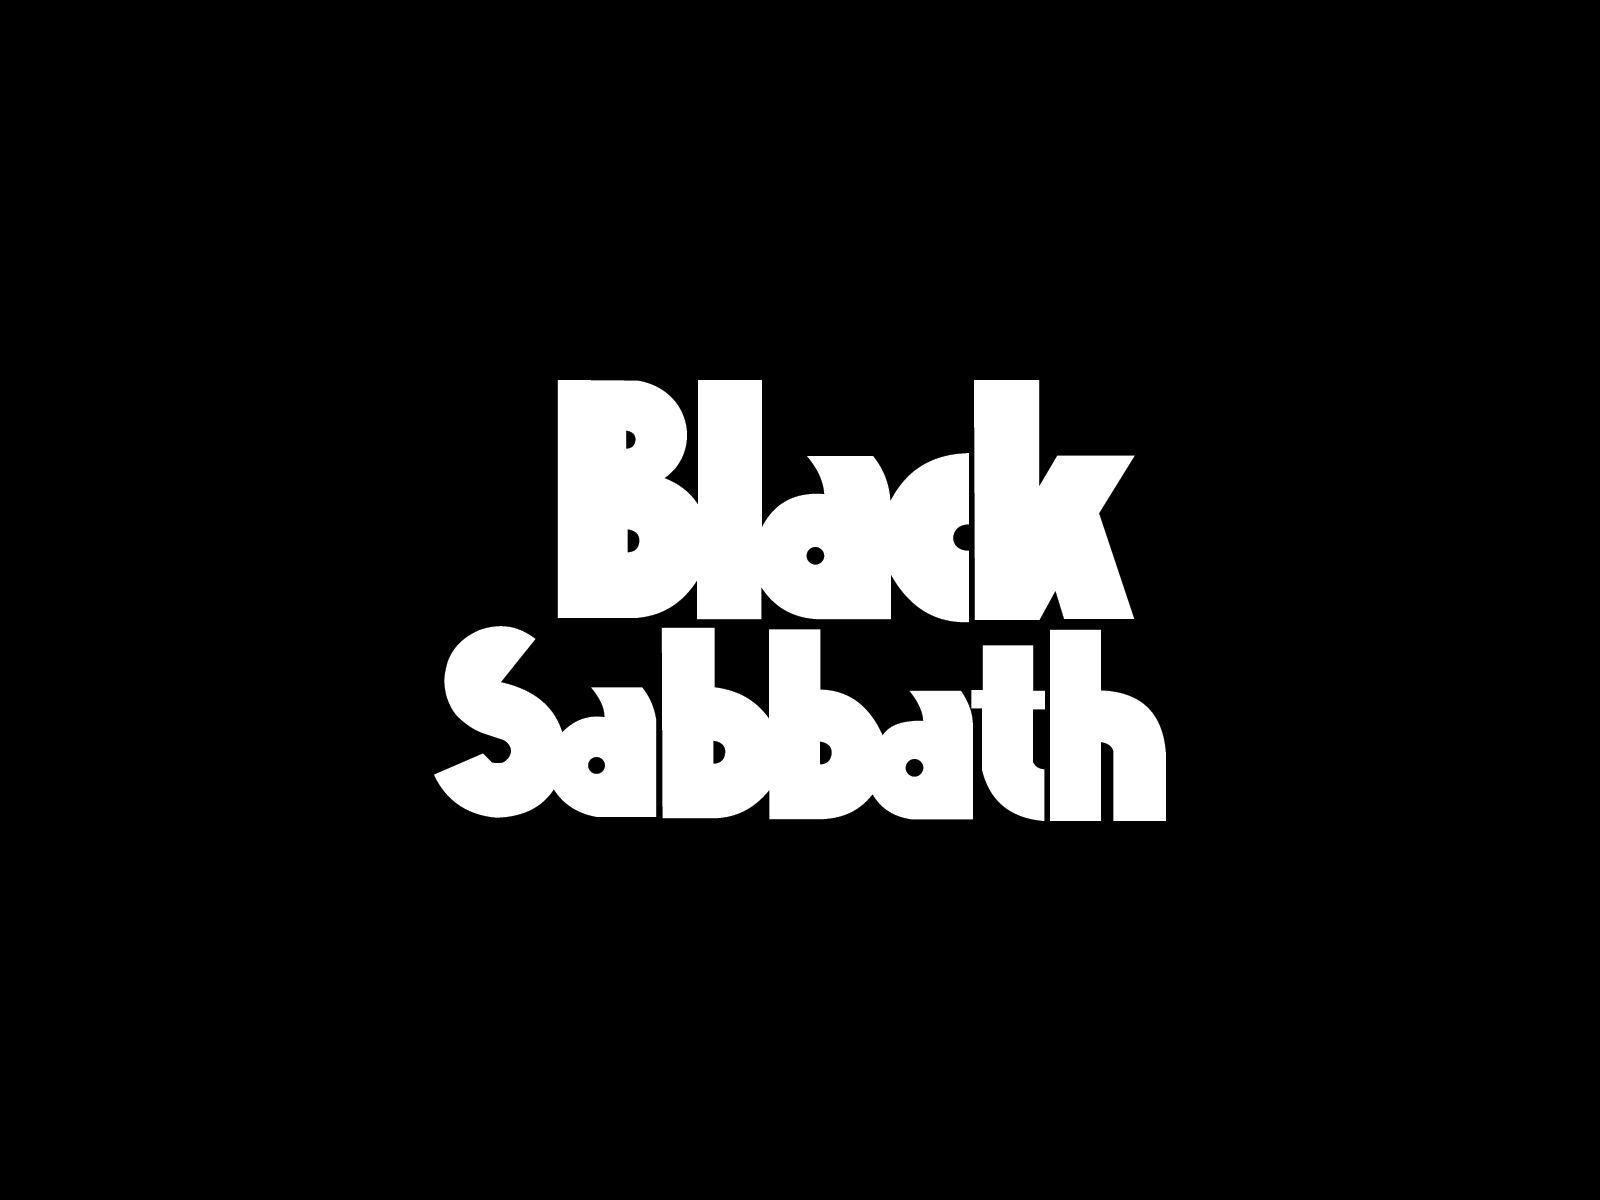 black sabbath ss logo